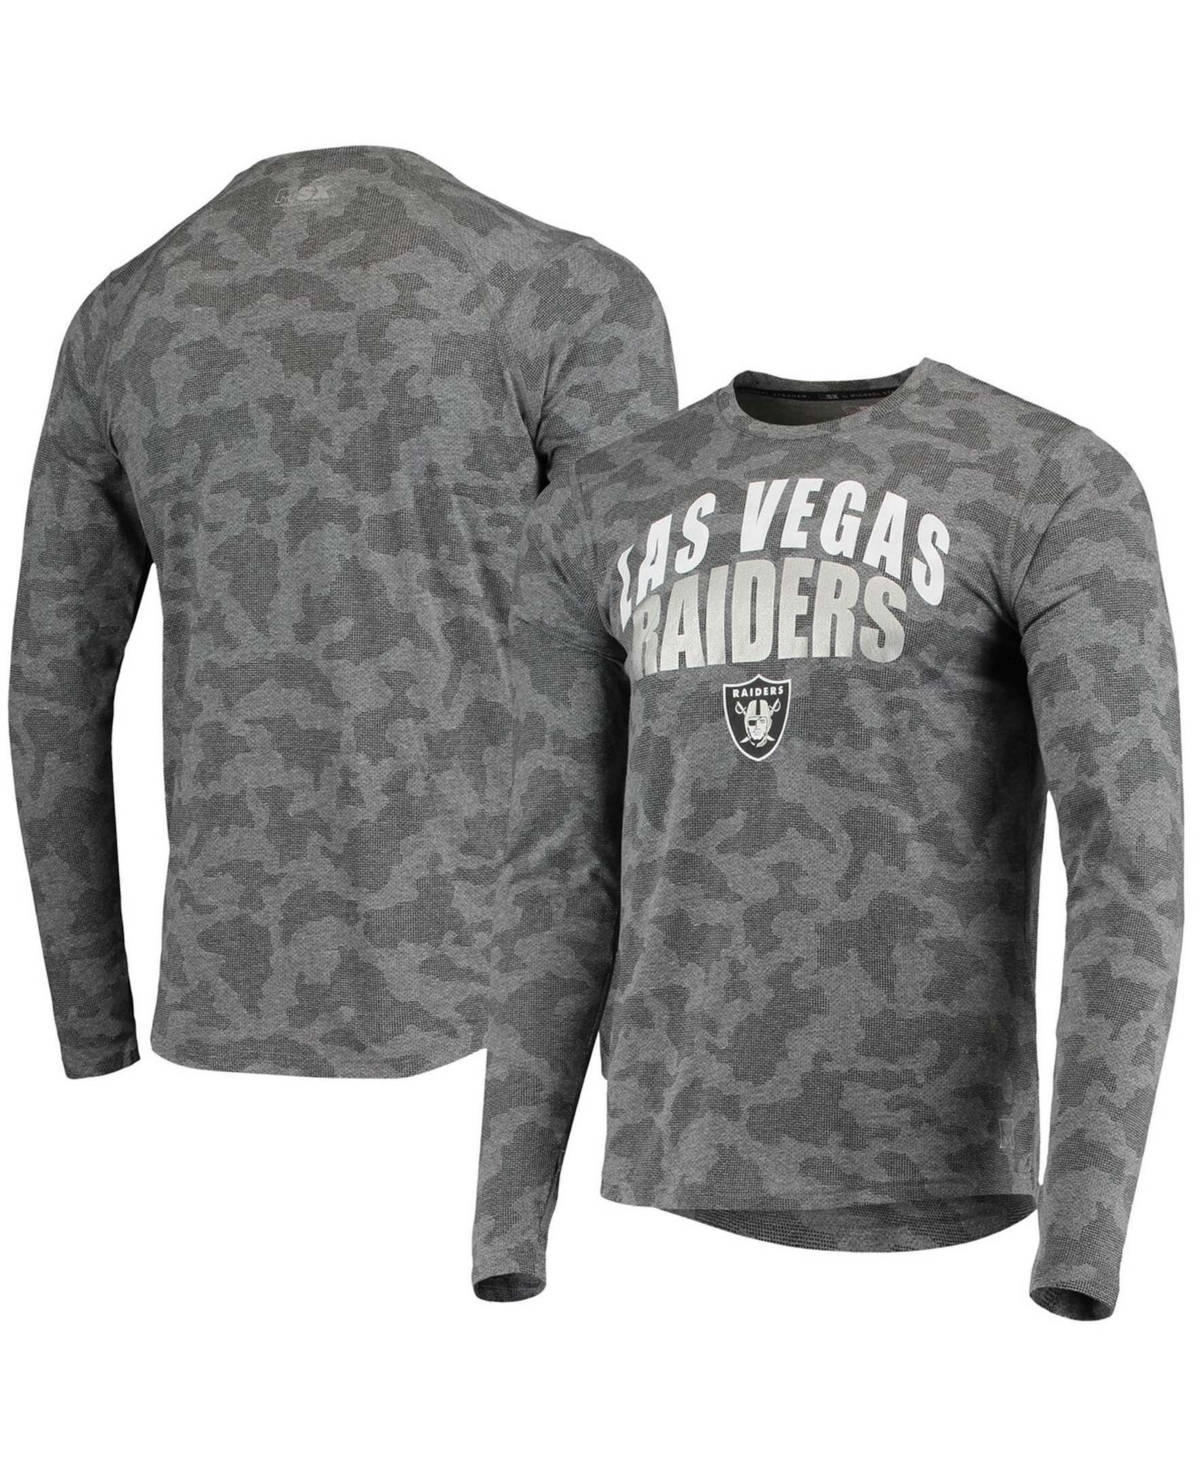 Men's Black Las Vegas Raiders Camo Performance Long Sleeve T-shirt - Black